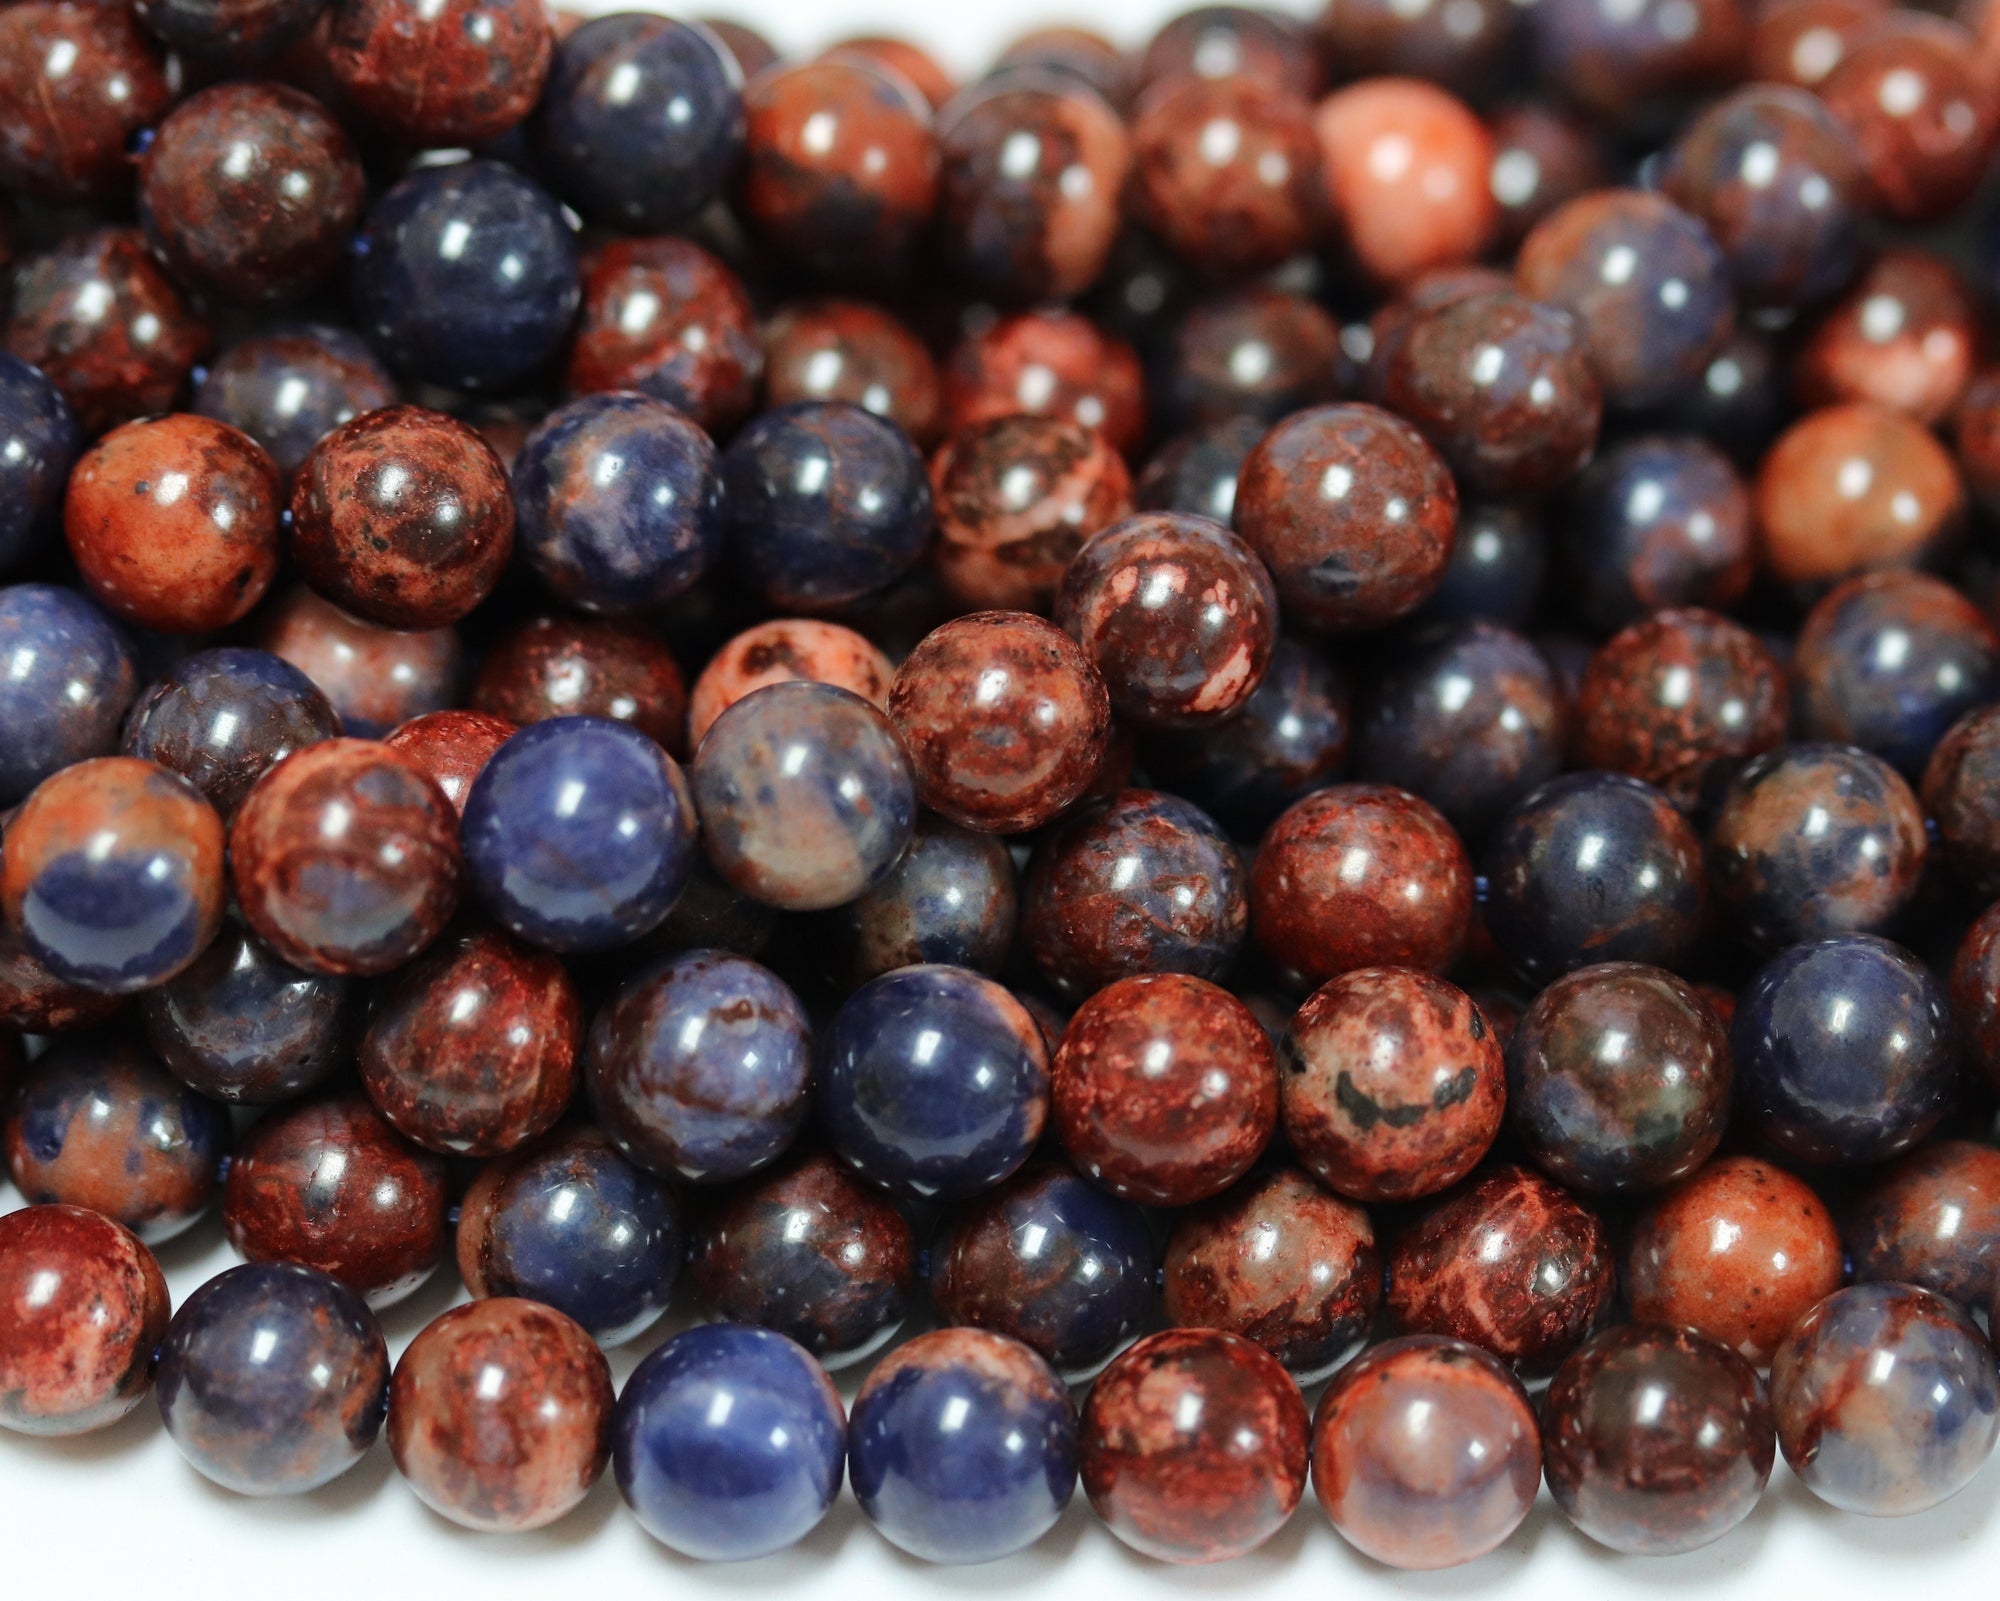 Orange Sodalite 8mm round natural gemstone beads 16" strand - Oz Beads 